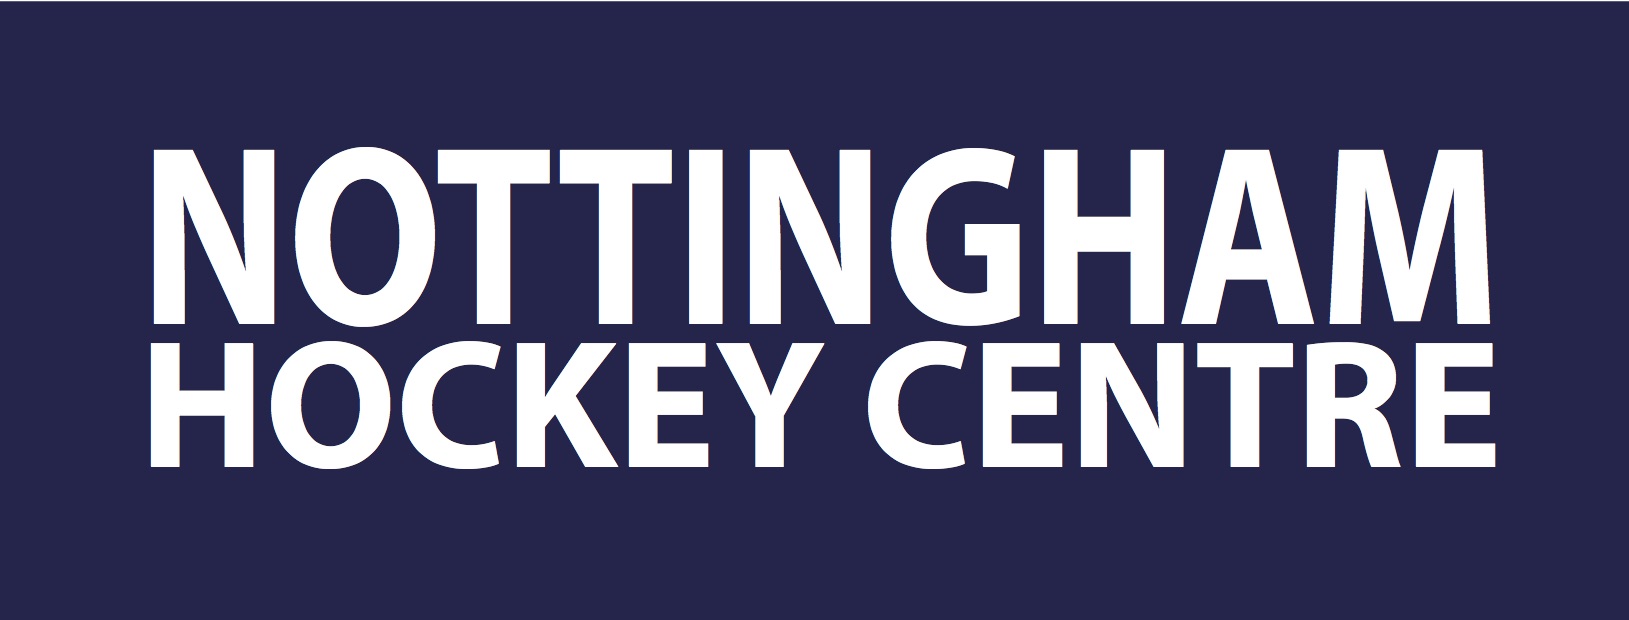 Nottingham Hockey Centre